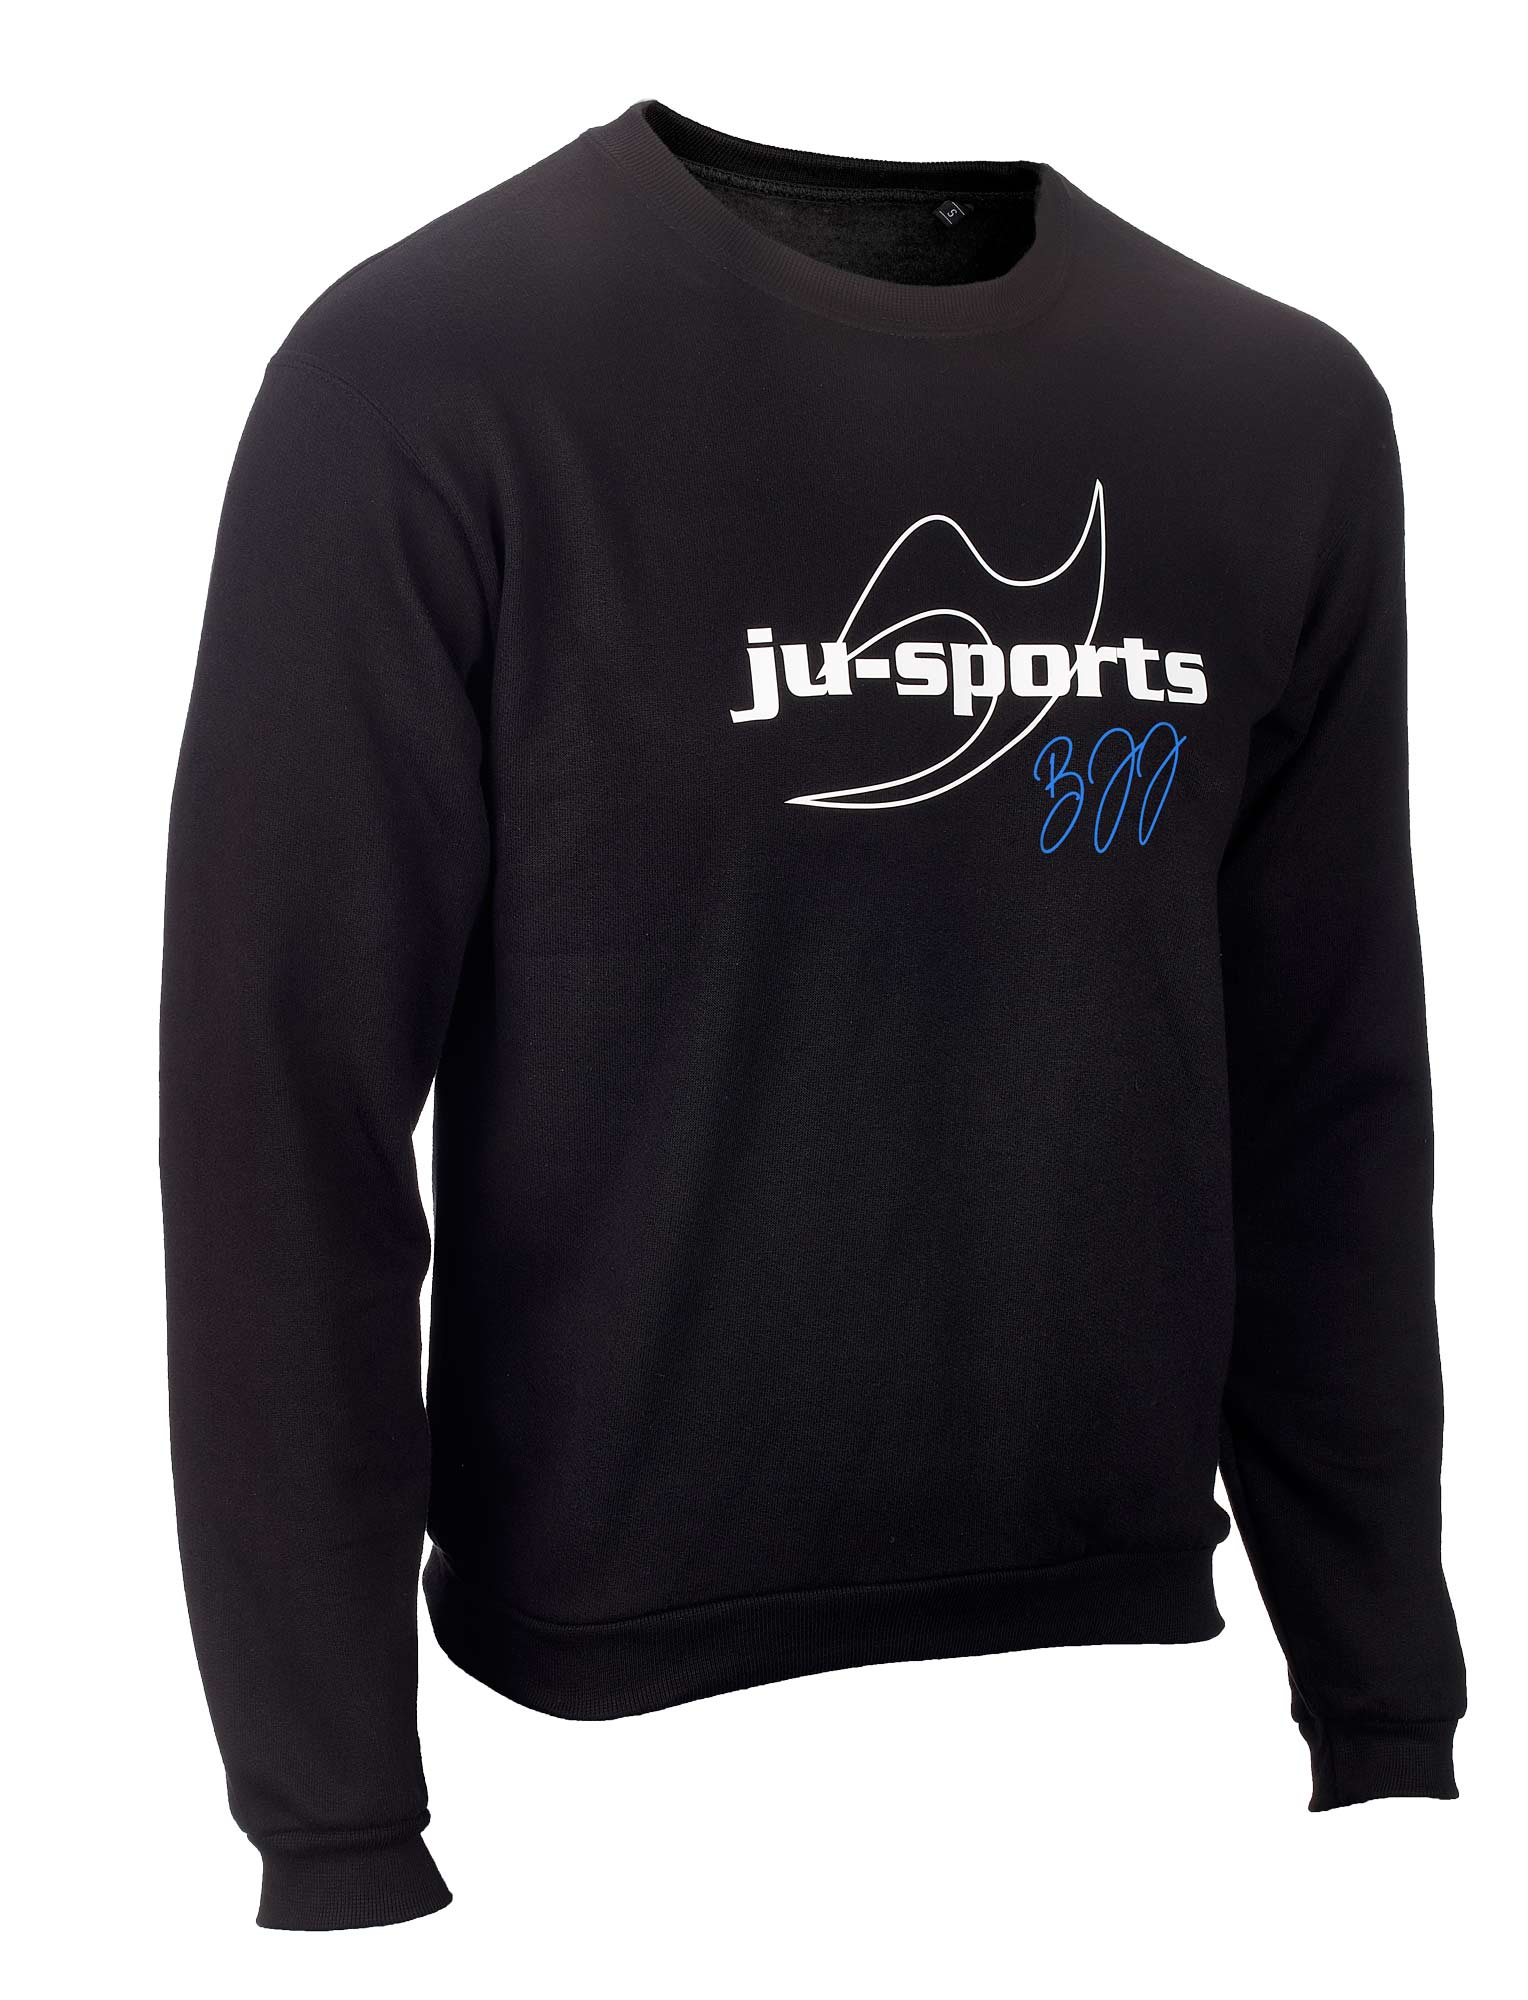 Ju-Sports Signature Line "BJJ" Sweater